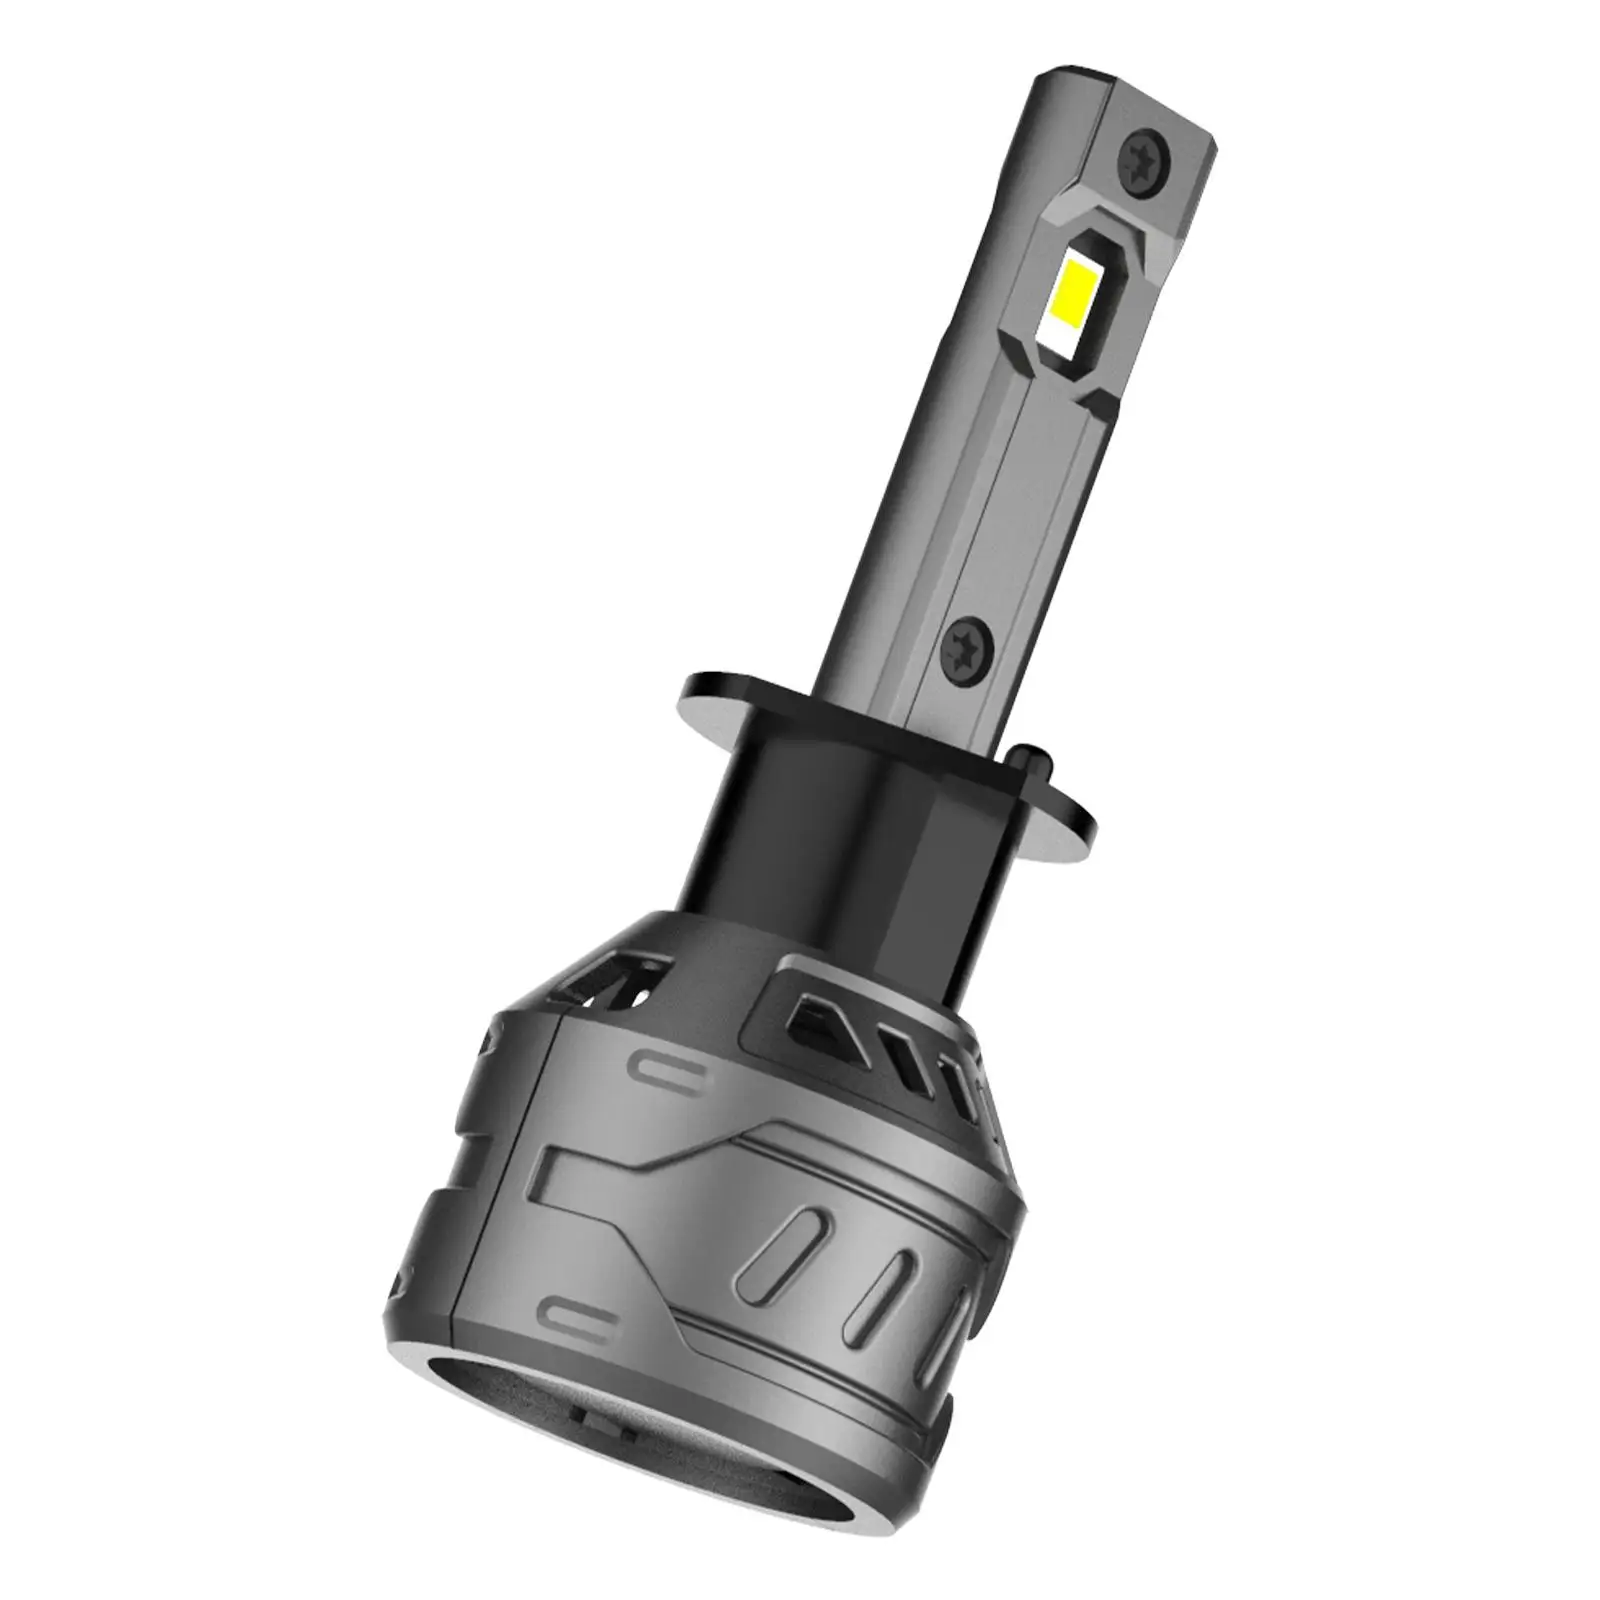 2Pcs LED Headlight Bulbs 100000+ Hour Lifespan Headlamp for Automotive